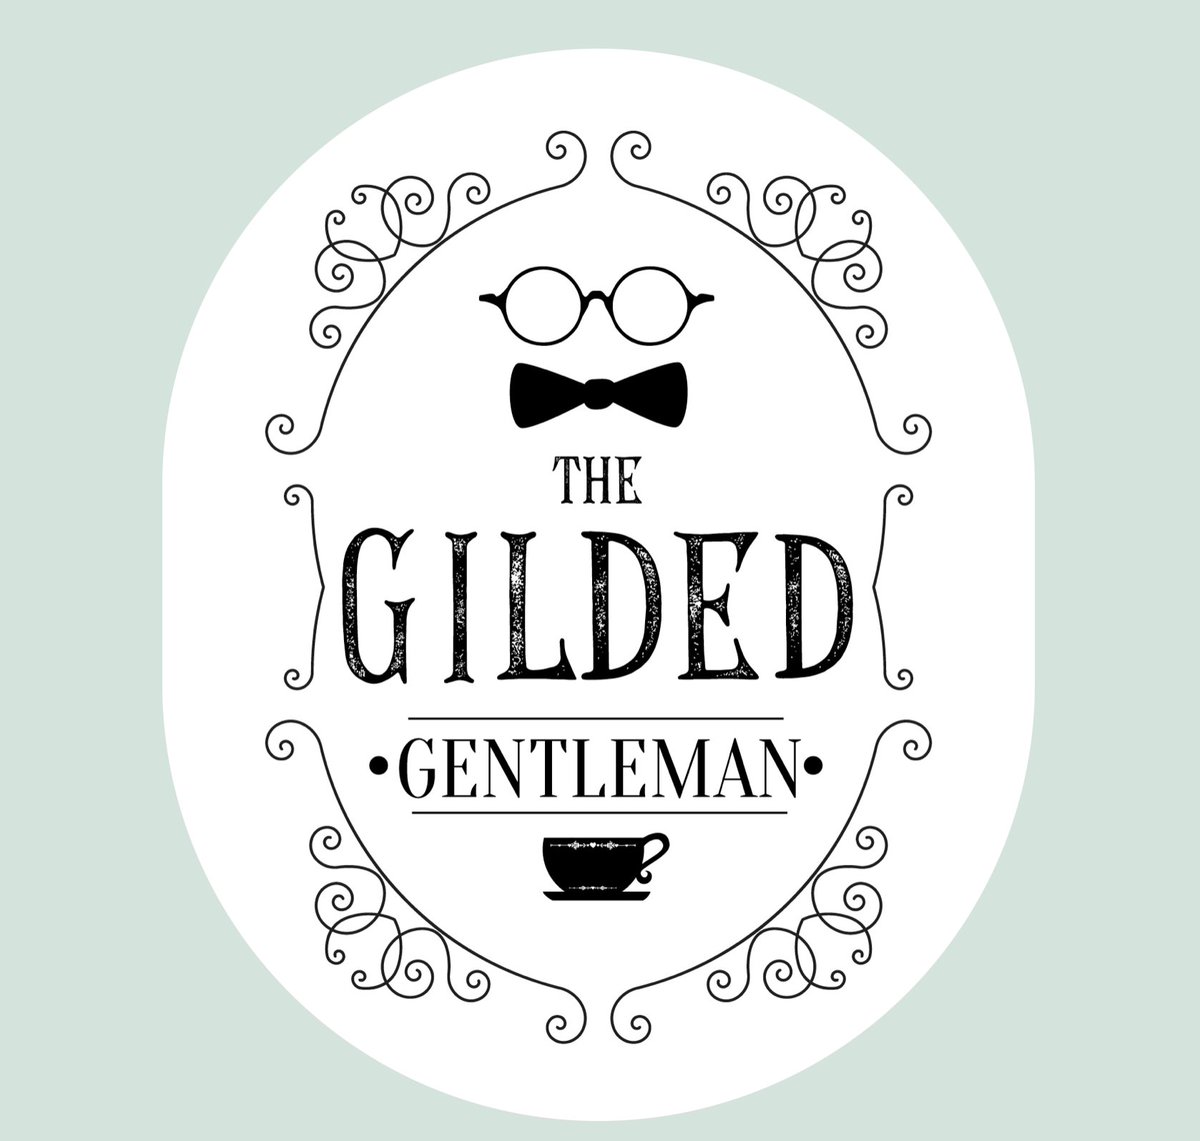 Episode #73 of The Gilded Gentleman features journalist and biographer @mtcometto, discussing the life of New York-born 19th century sculptor Emma Stebbins.

Listen here: thegildedgentleman.com/episodes/